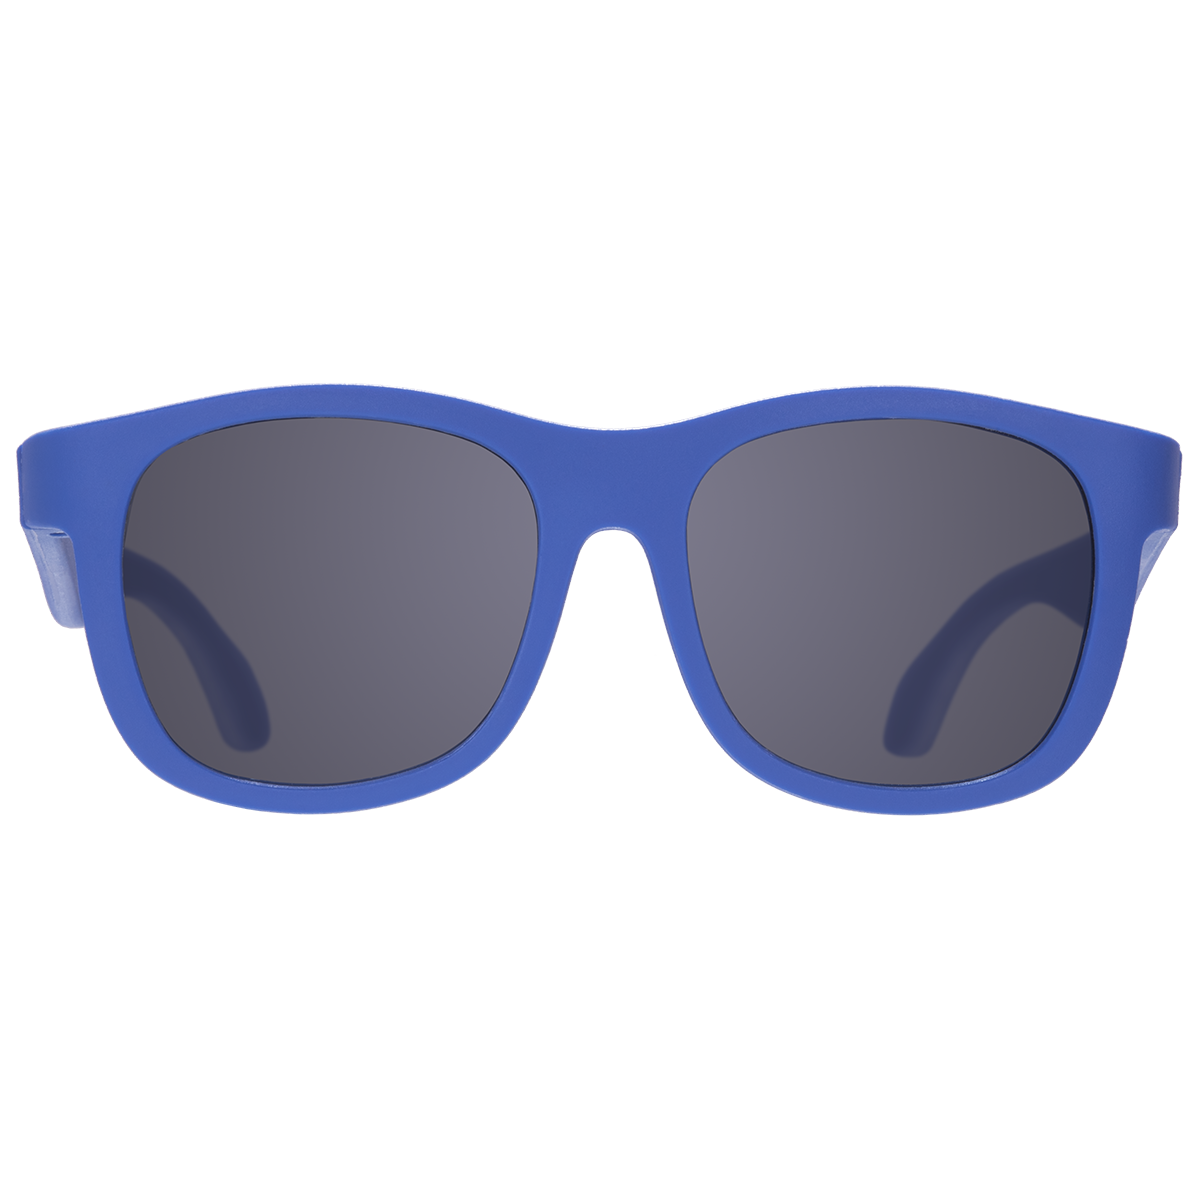 Babiators Original Navigator: Good As Blue Kids Sunglasses Babiators   